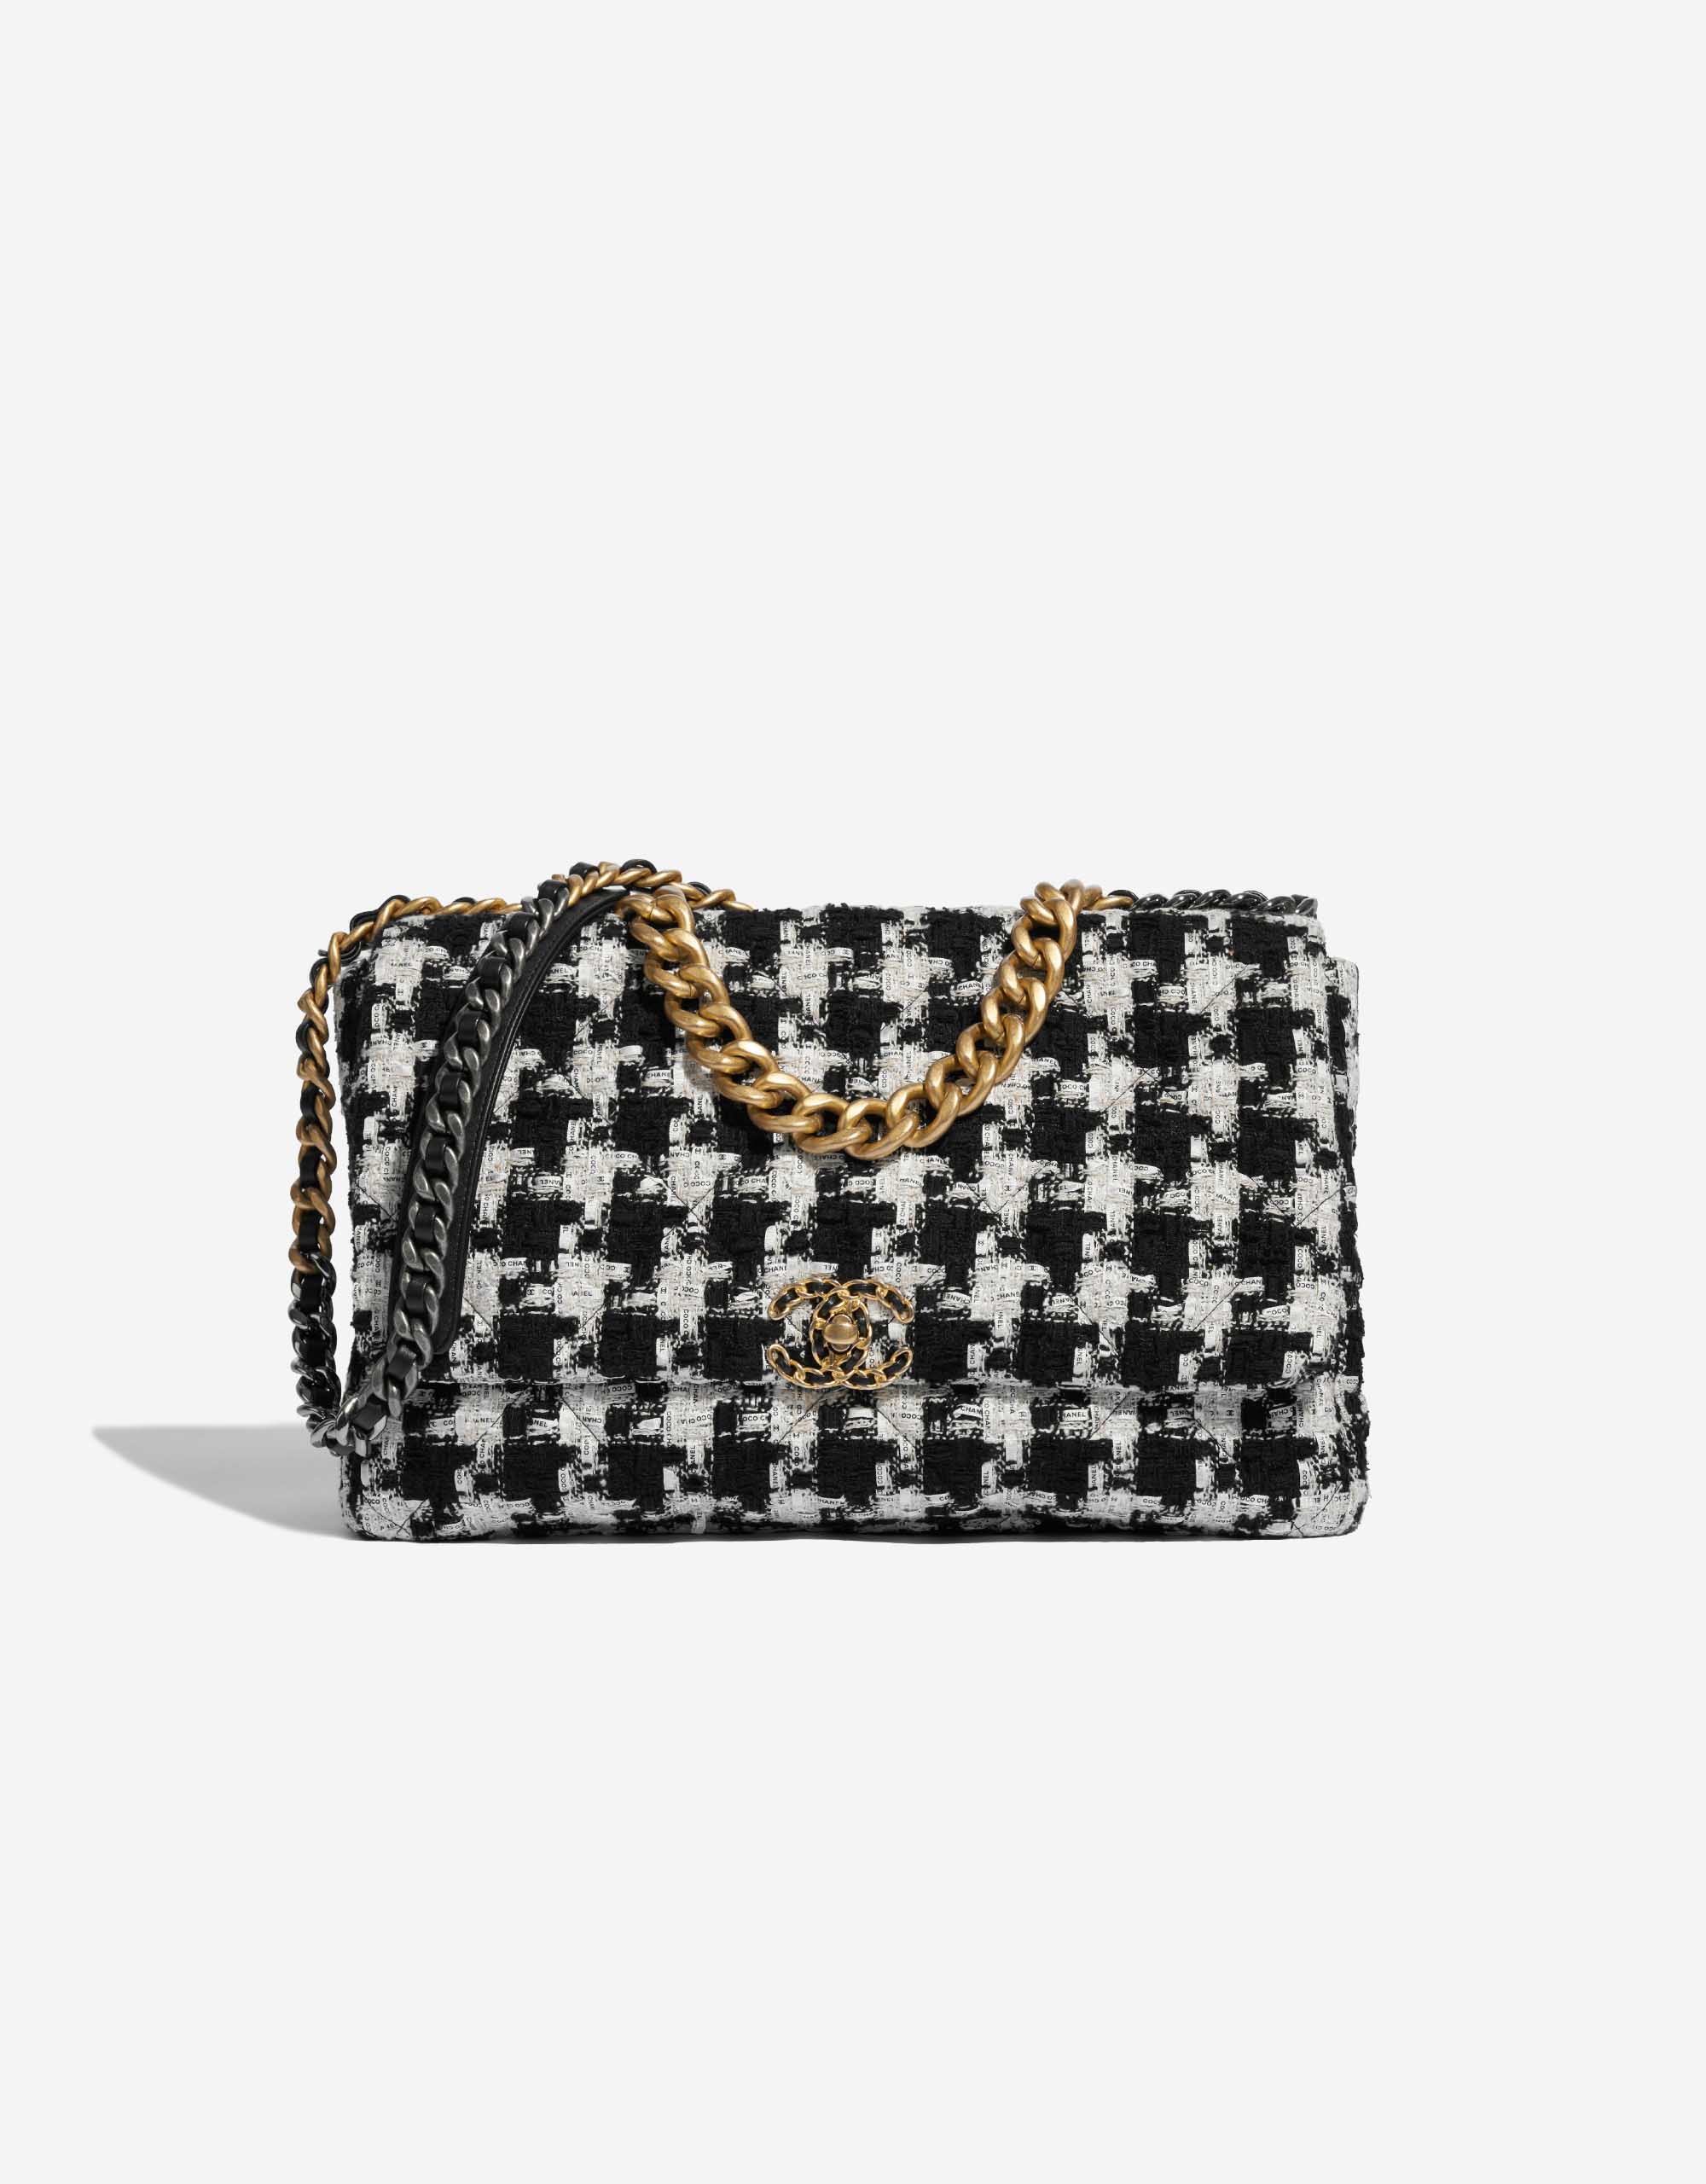 Chanel 19 Large Flap Bag Tweed Black / White | SACLÀB